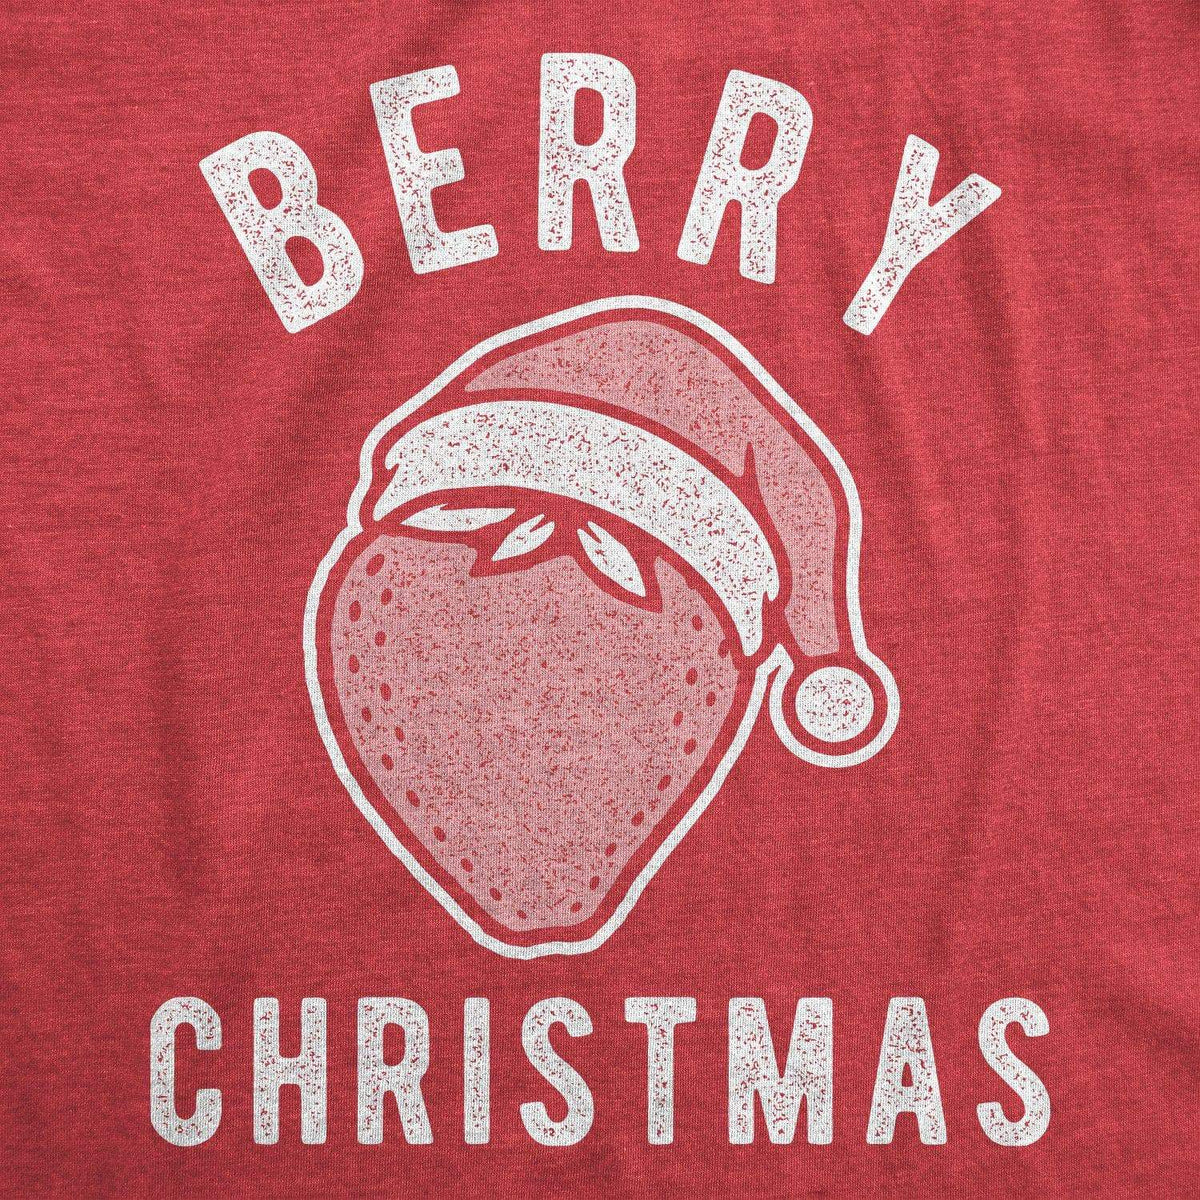 Berry Christmas Women&#39;s Tshirt - Crazy Dog T-Shirts